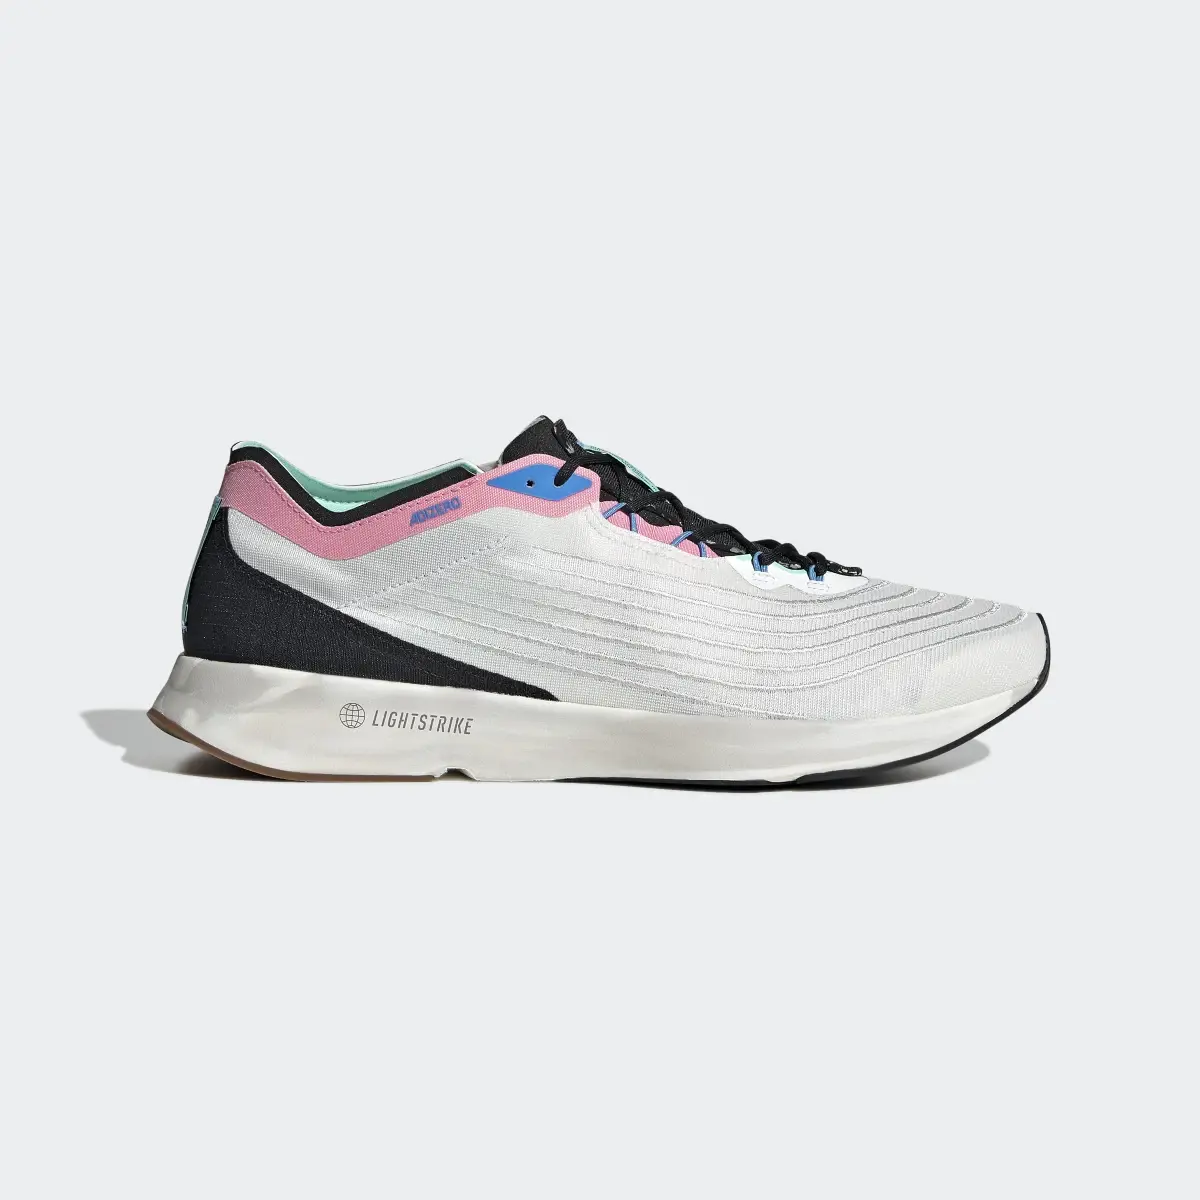 Adidas Adizero Lightstrike Running Shoes Low. 2